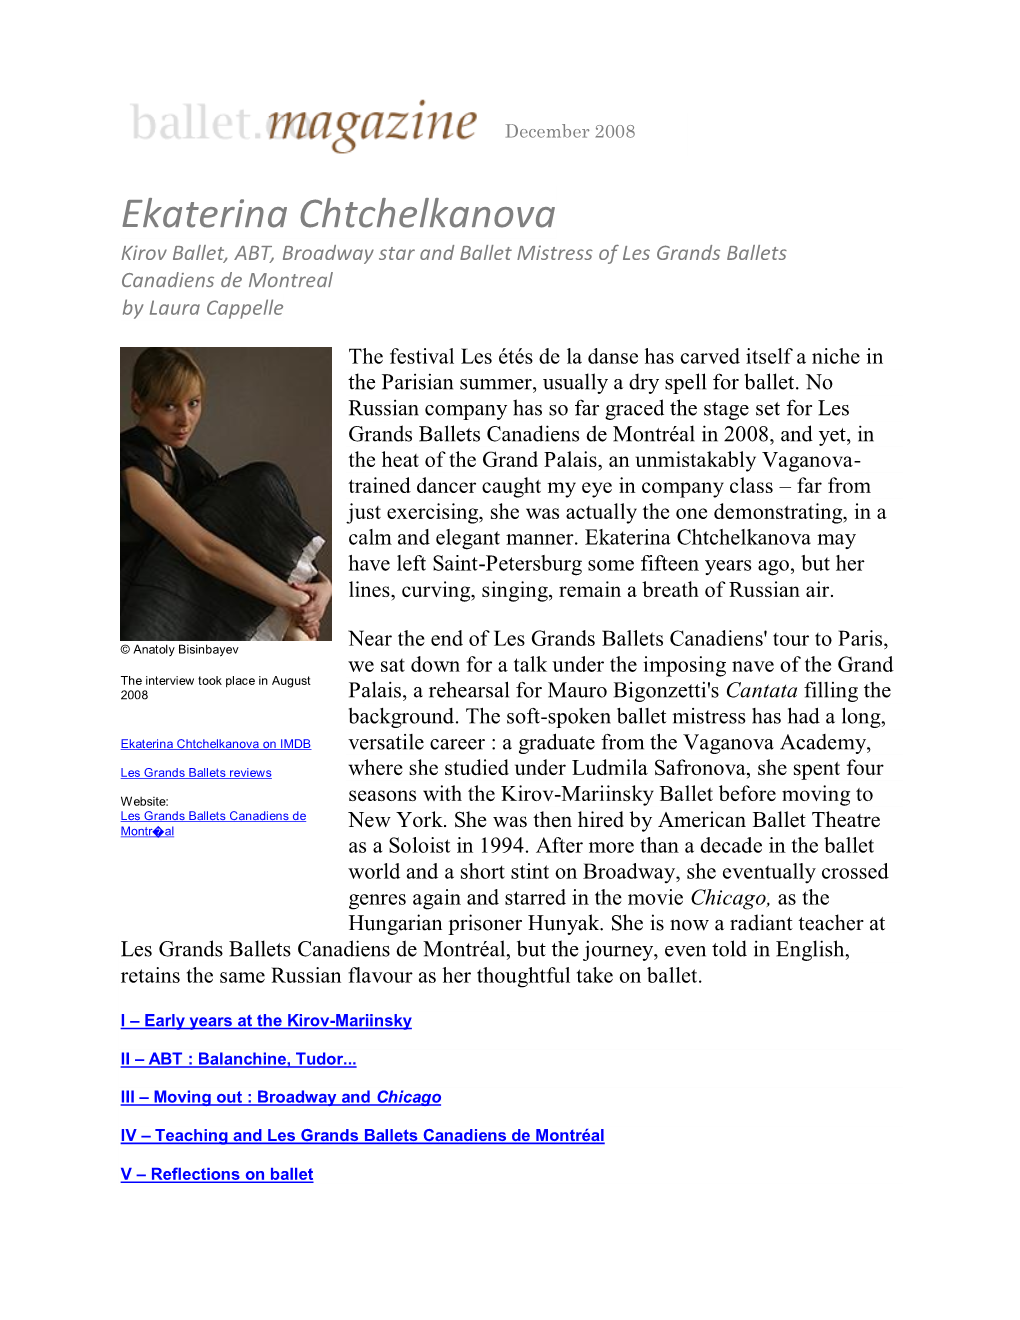 Ekaterina Chtchelkanova Kirov Ballet, ABT, Broadway Star and Ballet Mistress of Les Grands Ballets Canadiens De Montreal by Laura Cappelle